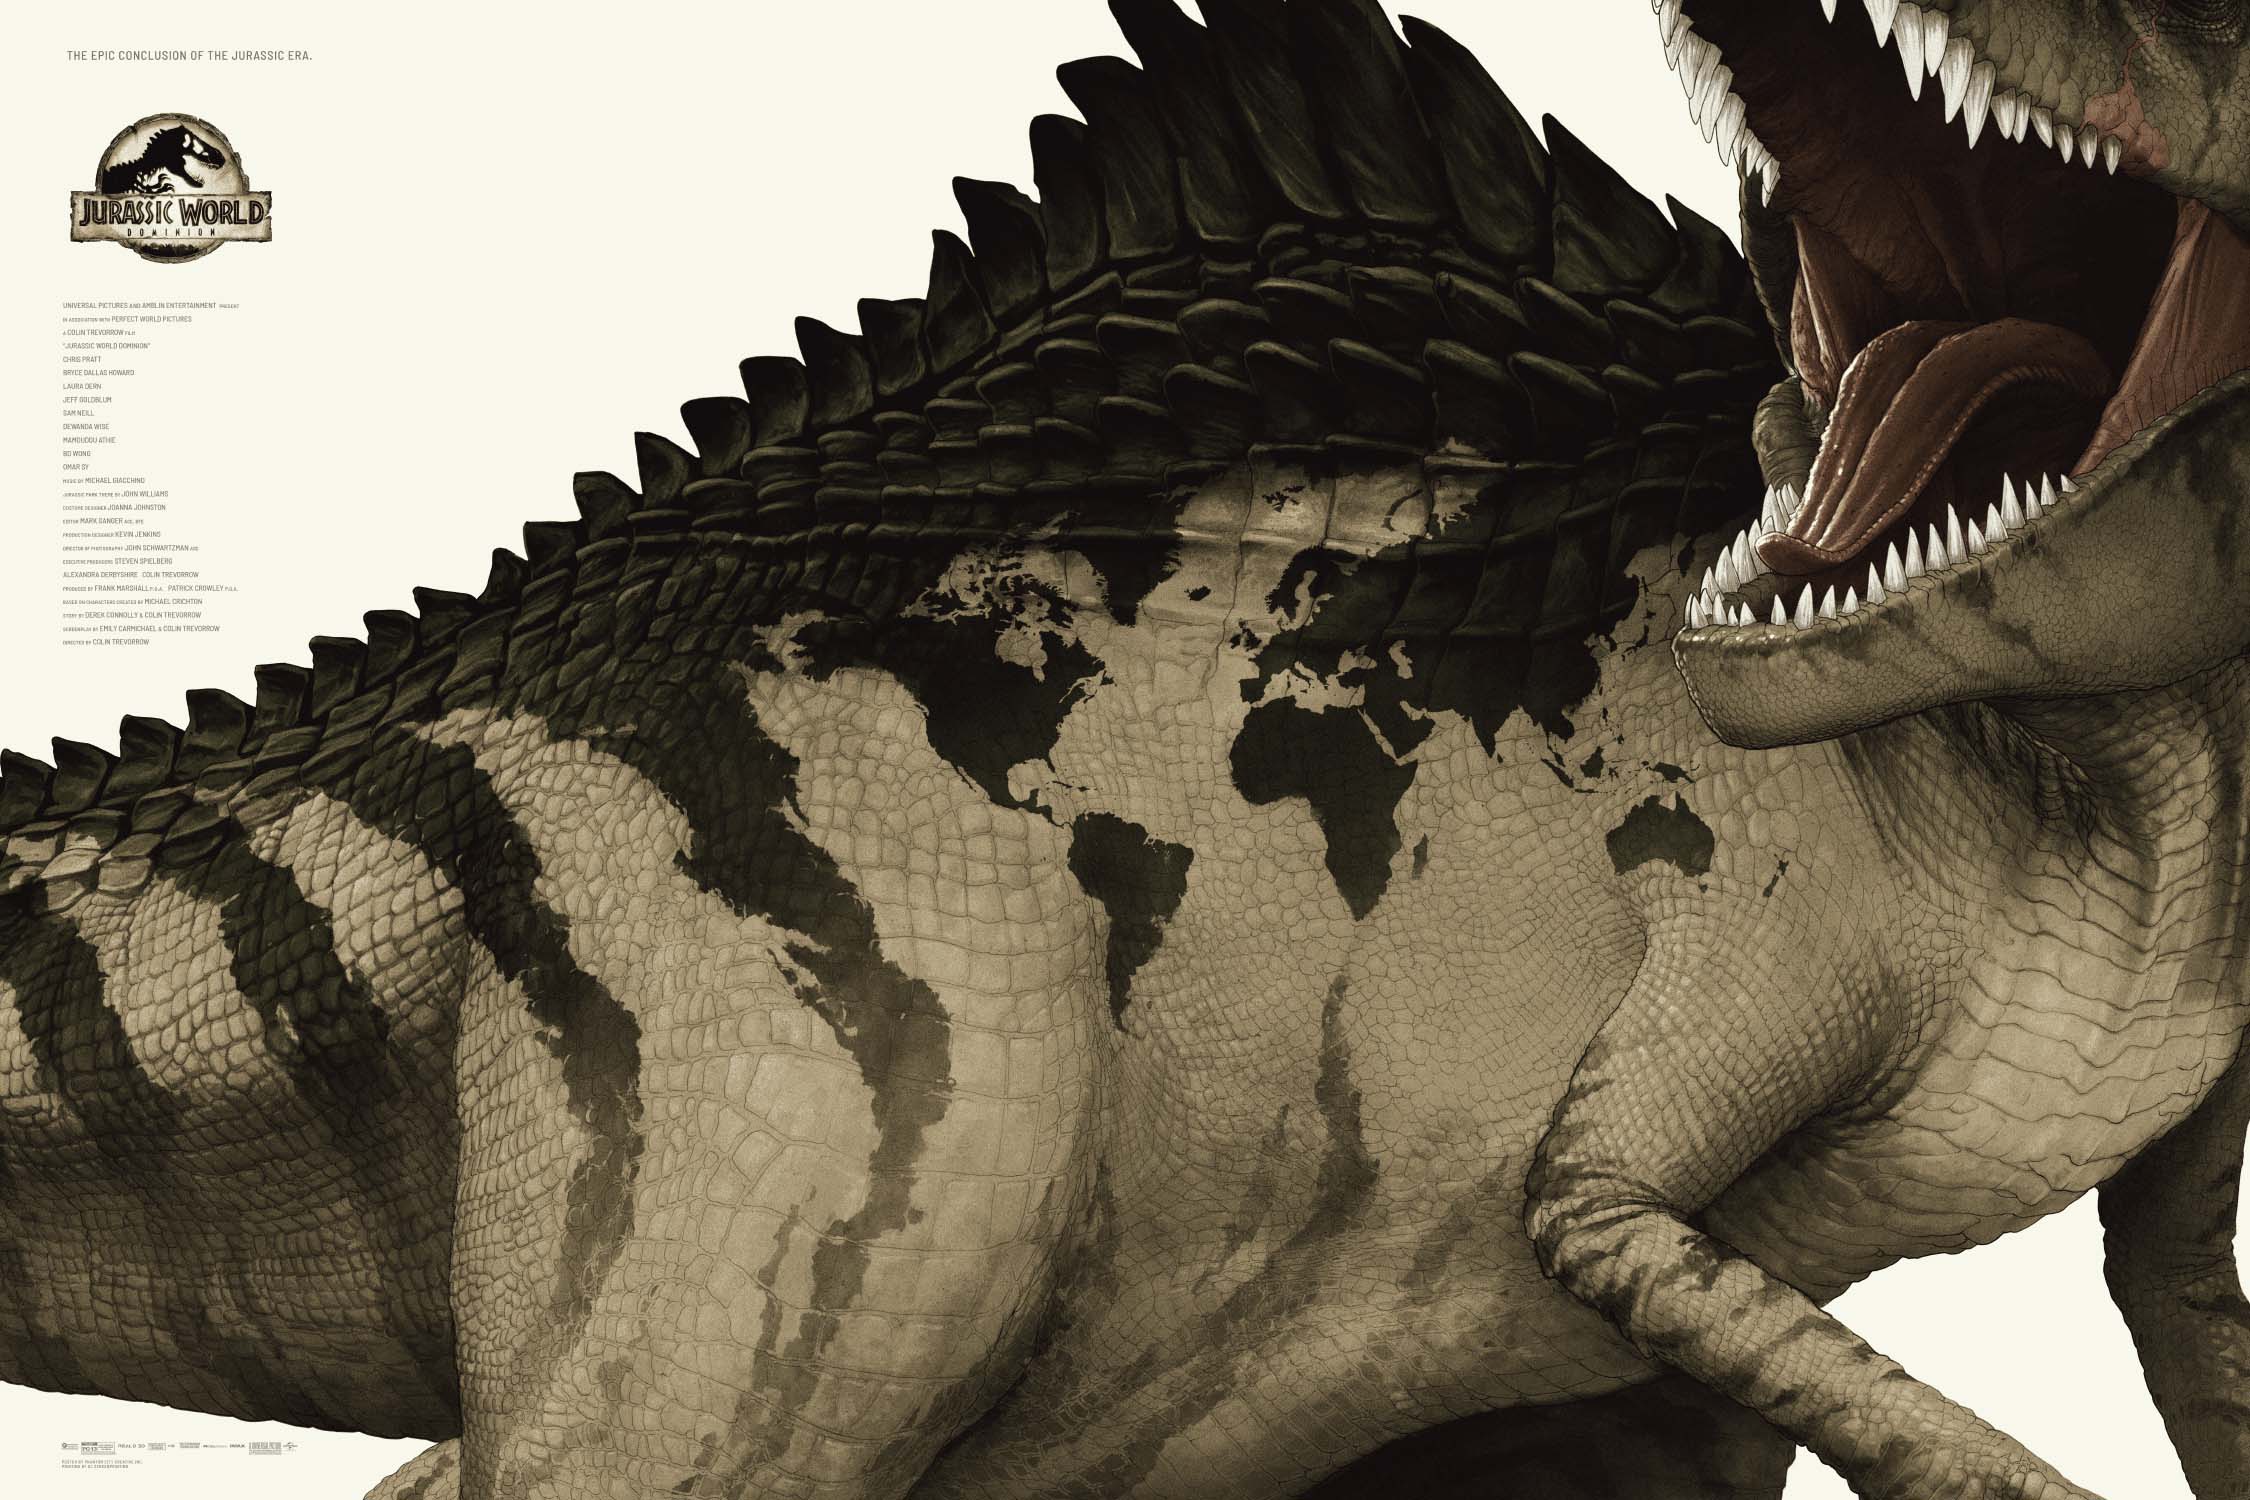 Jurassic World Dominion' Poster by Jurassic World